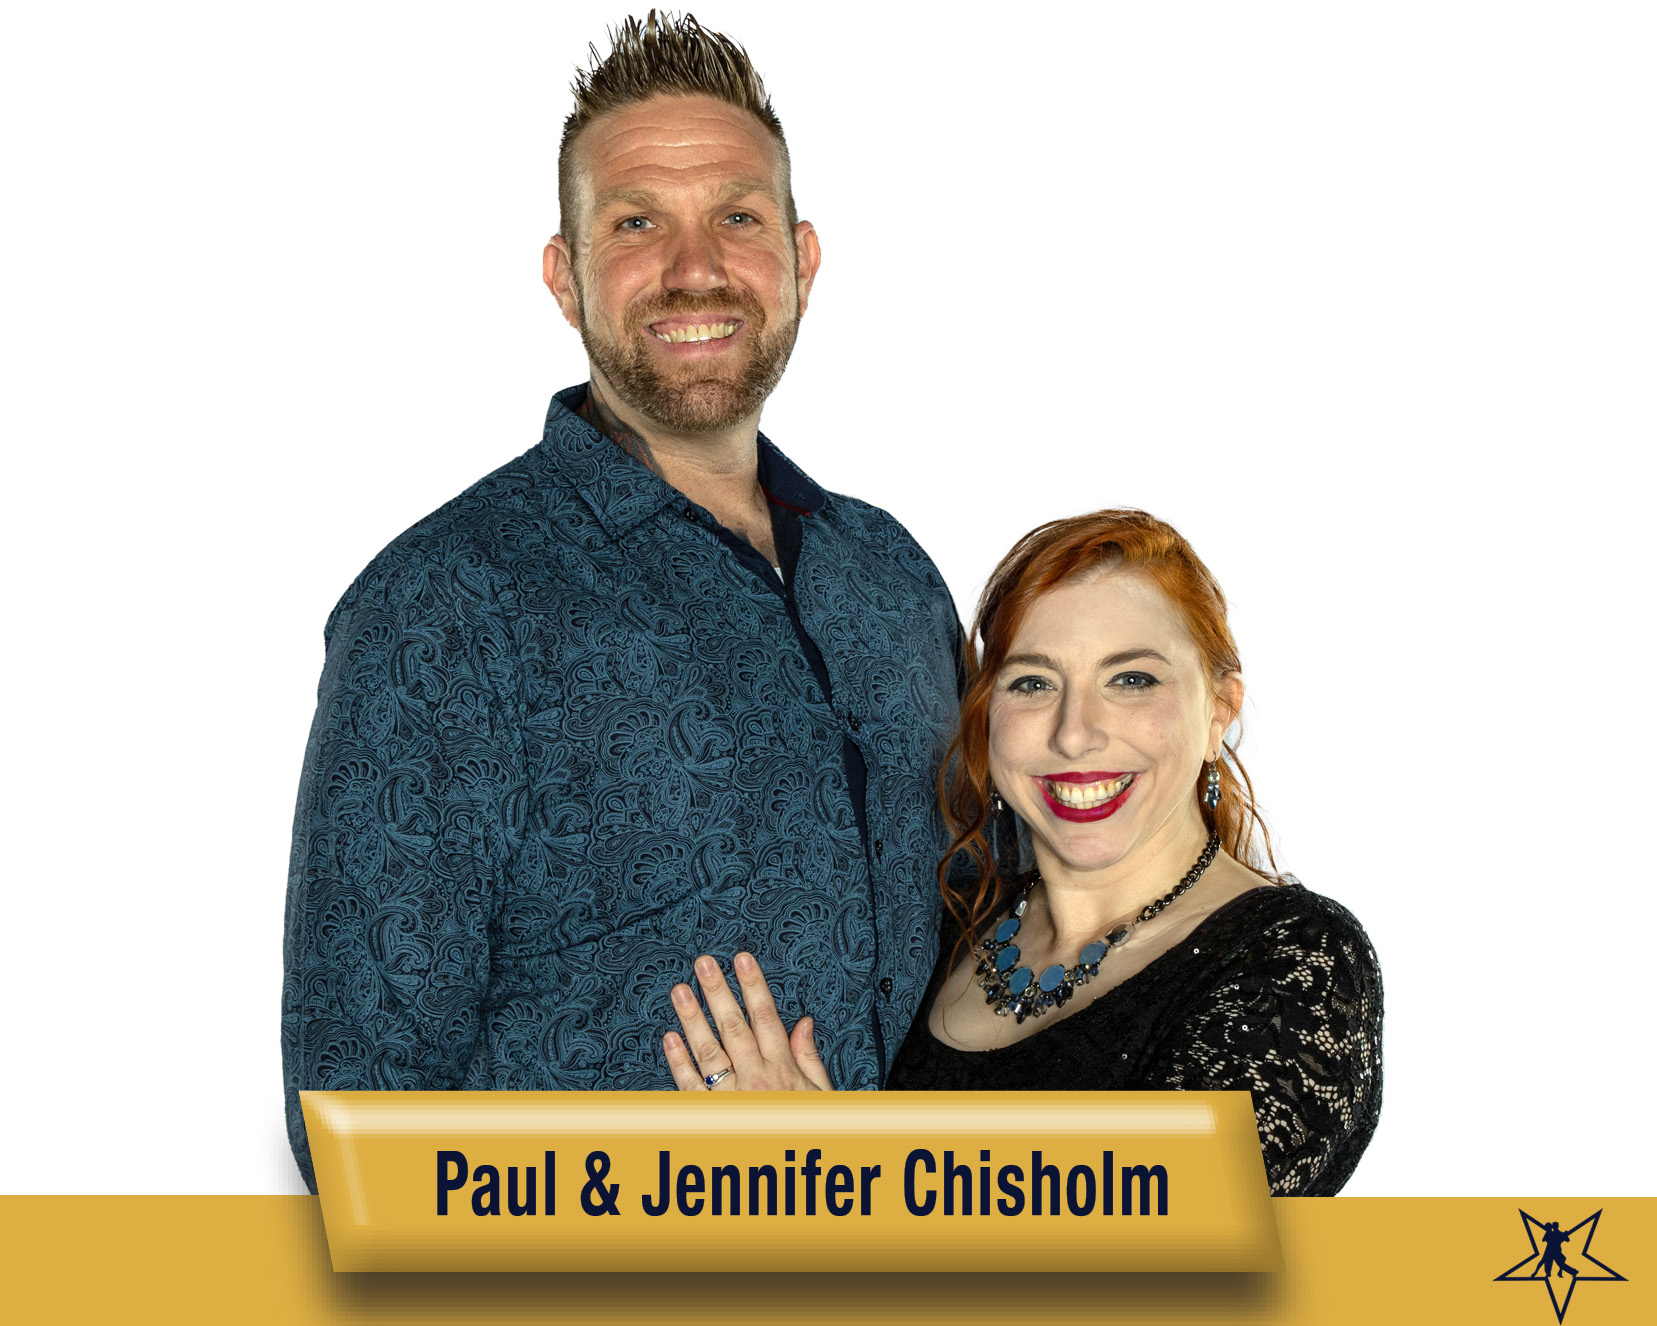 Paul and Jennifer Chisholm